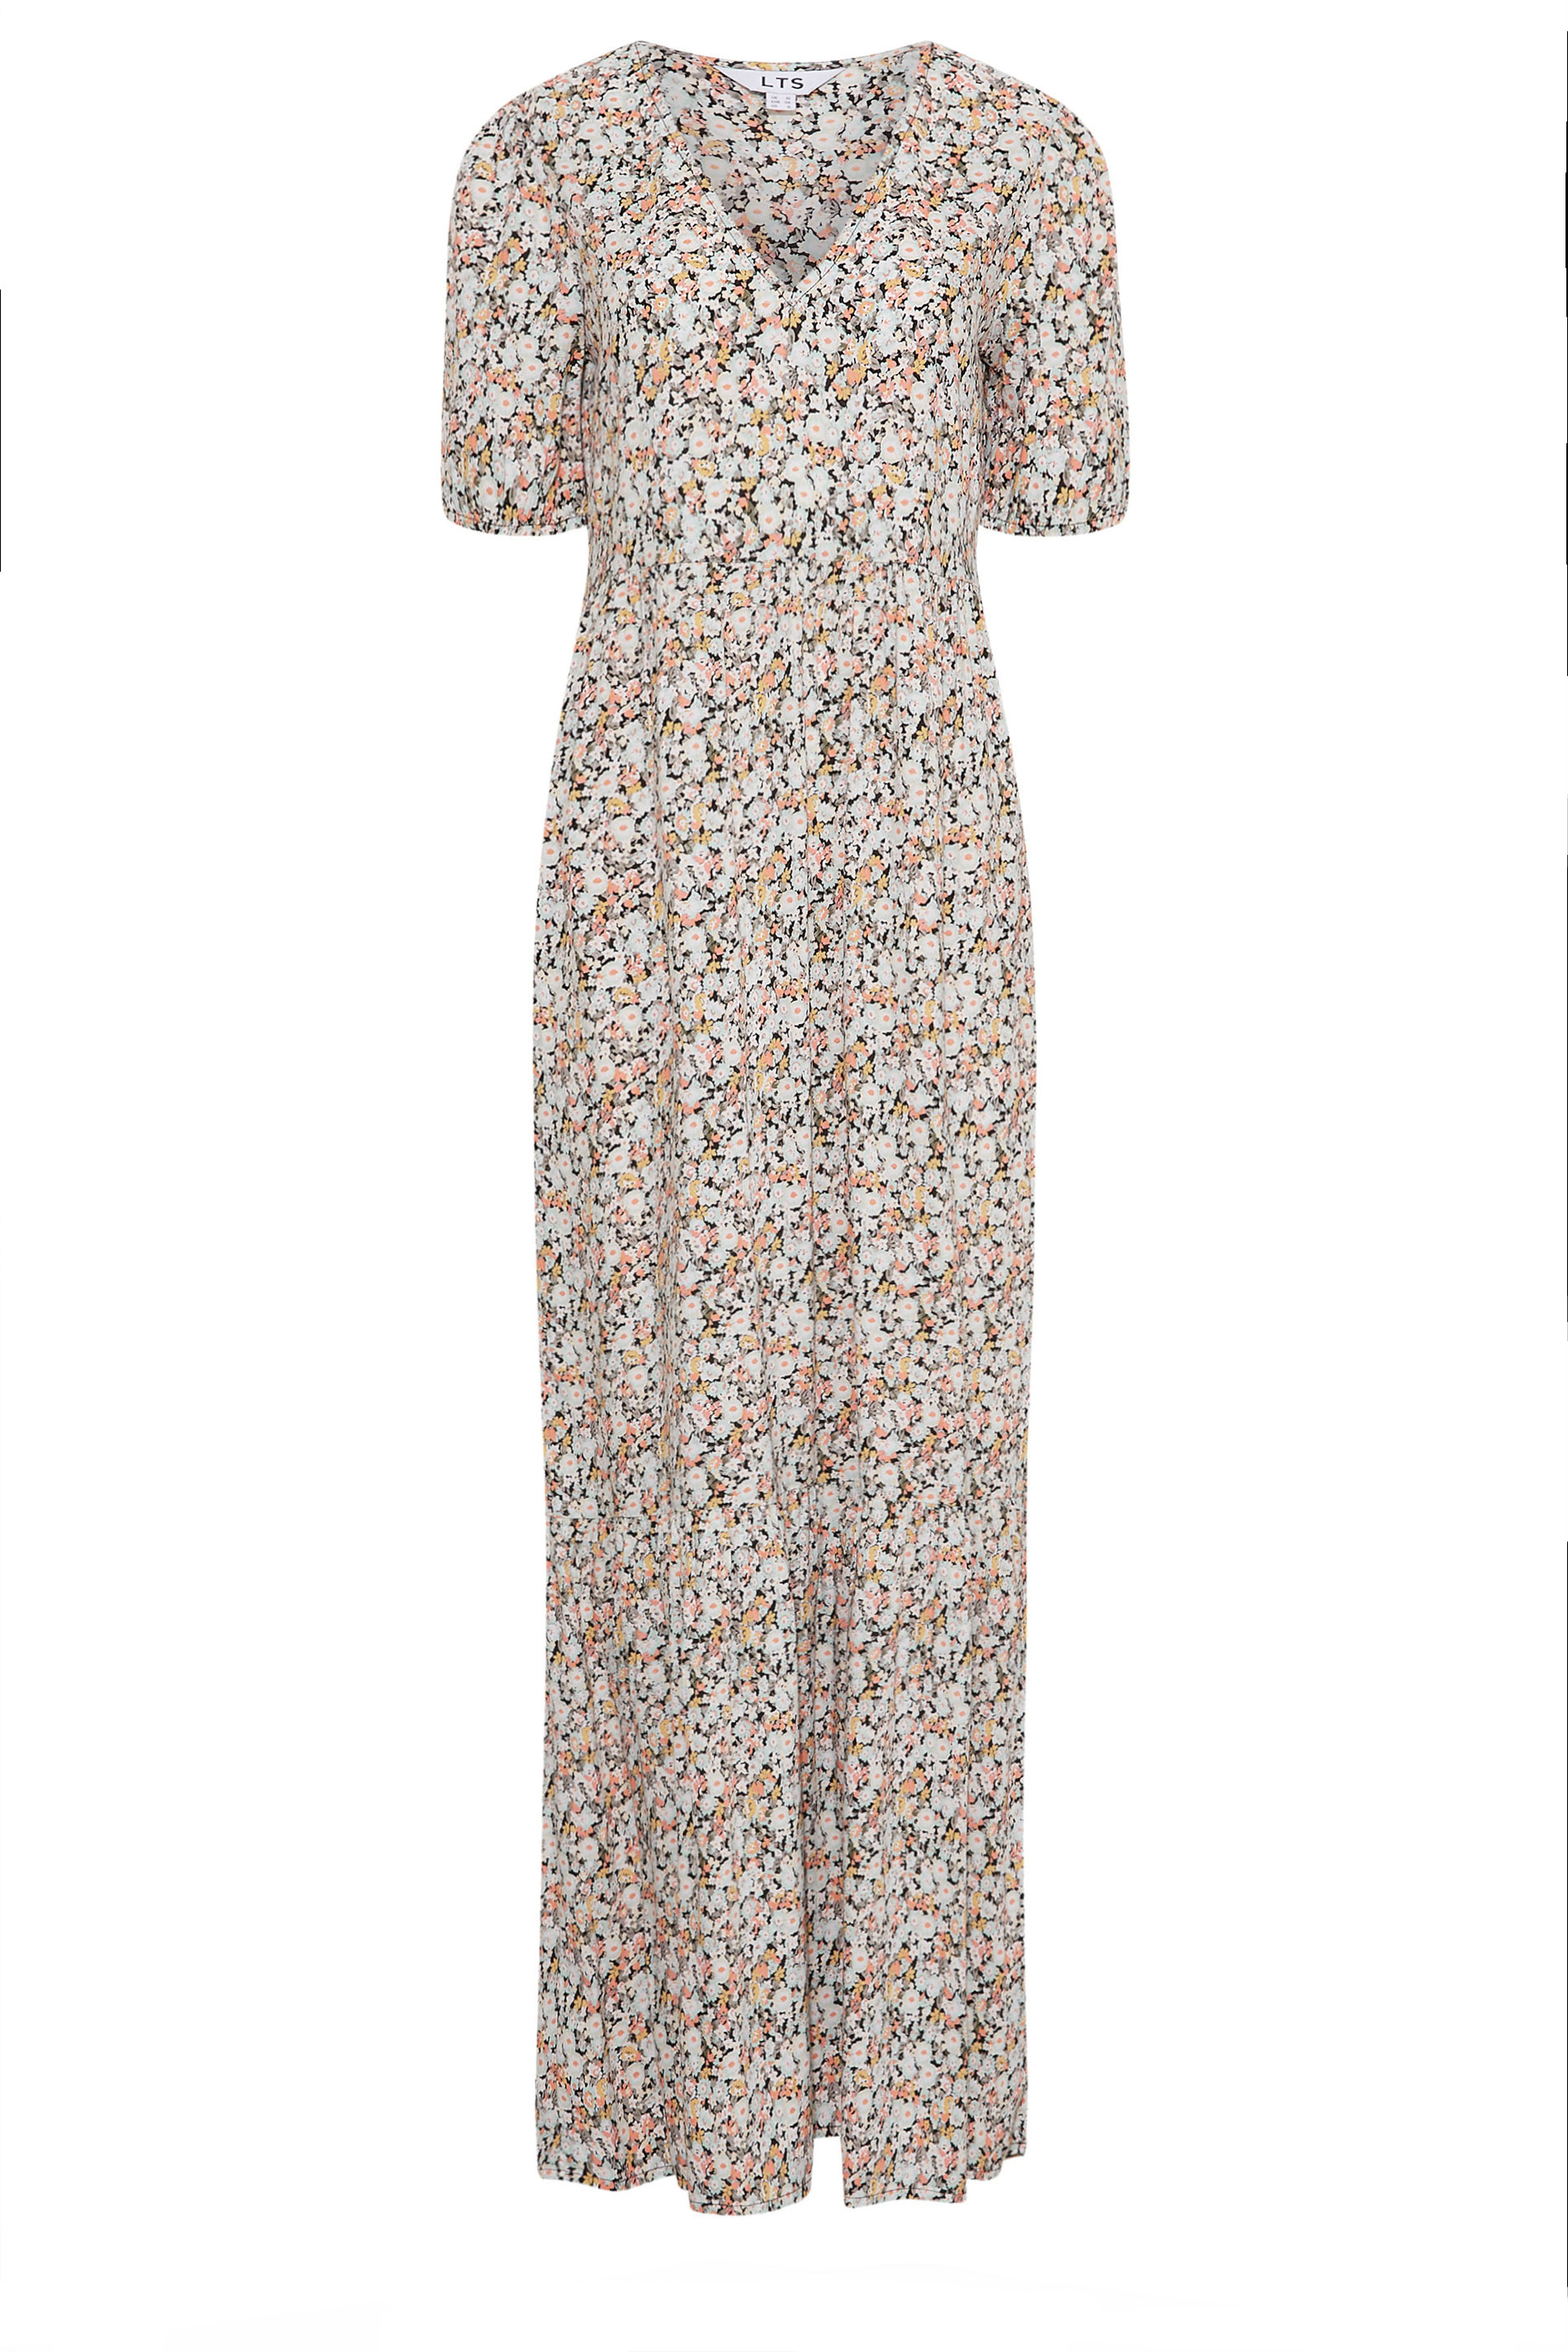 Tall Women's LTS Beige Brown Floral Print Tiered Midaxi Dress | Long ...